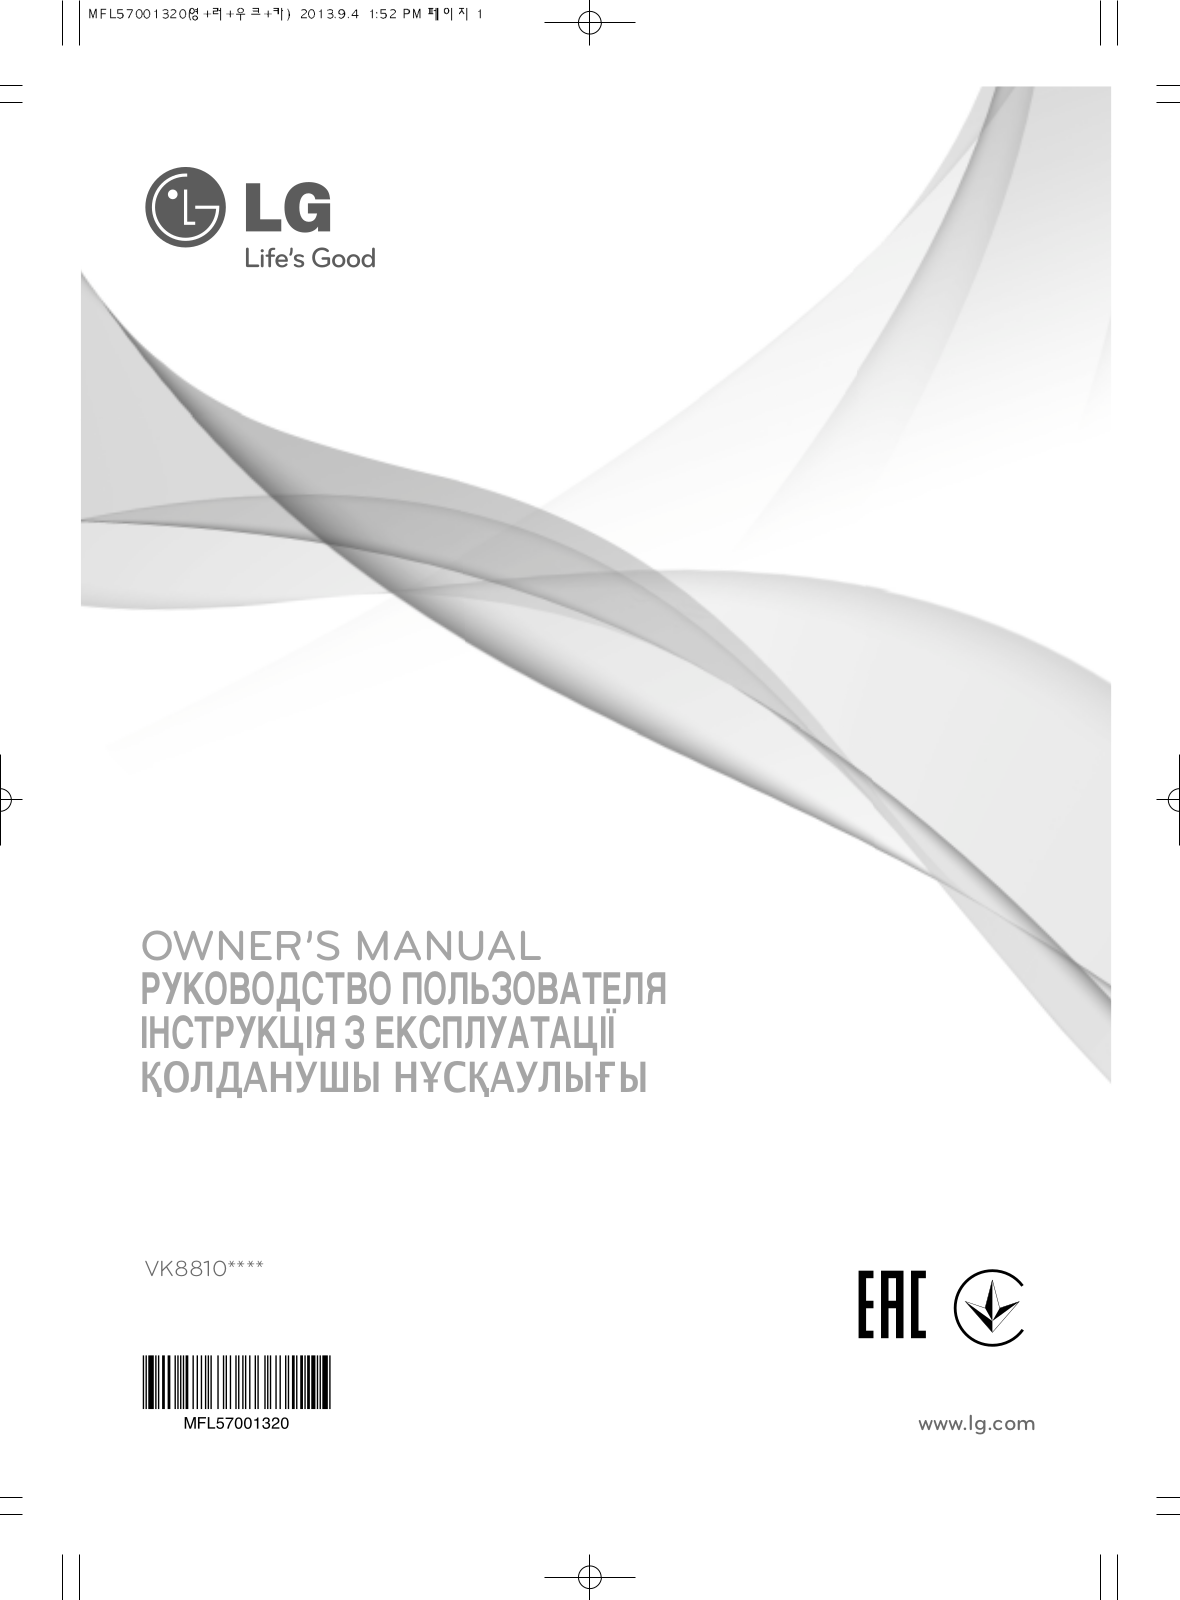 LG VK8810HFNR User Manual